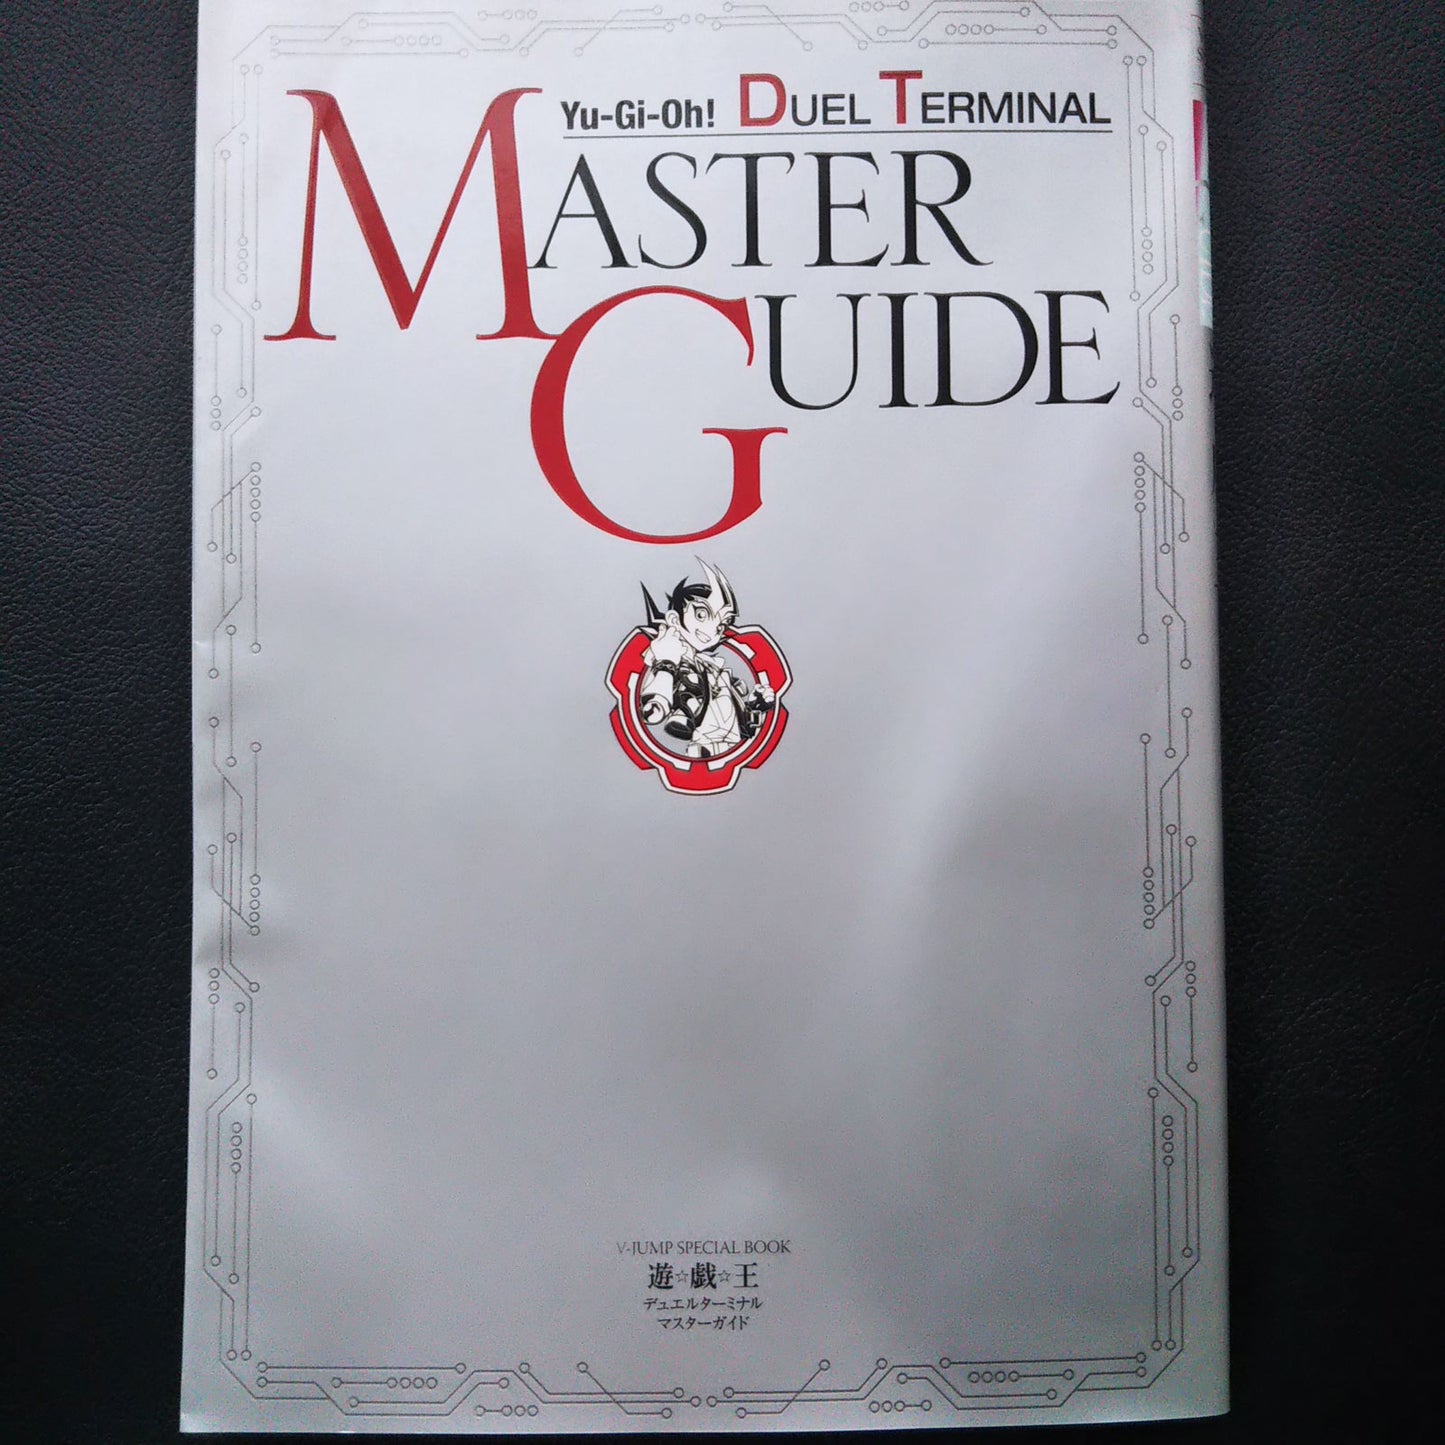 Yu-Gi-Oh! Duel Terminal Master Guide